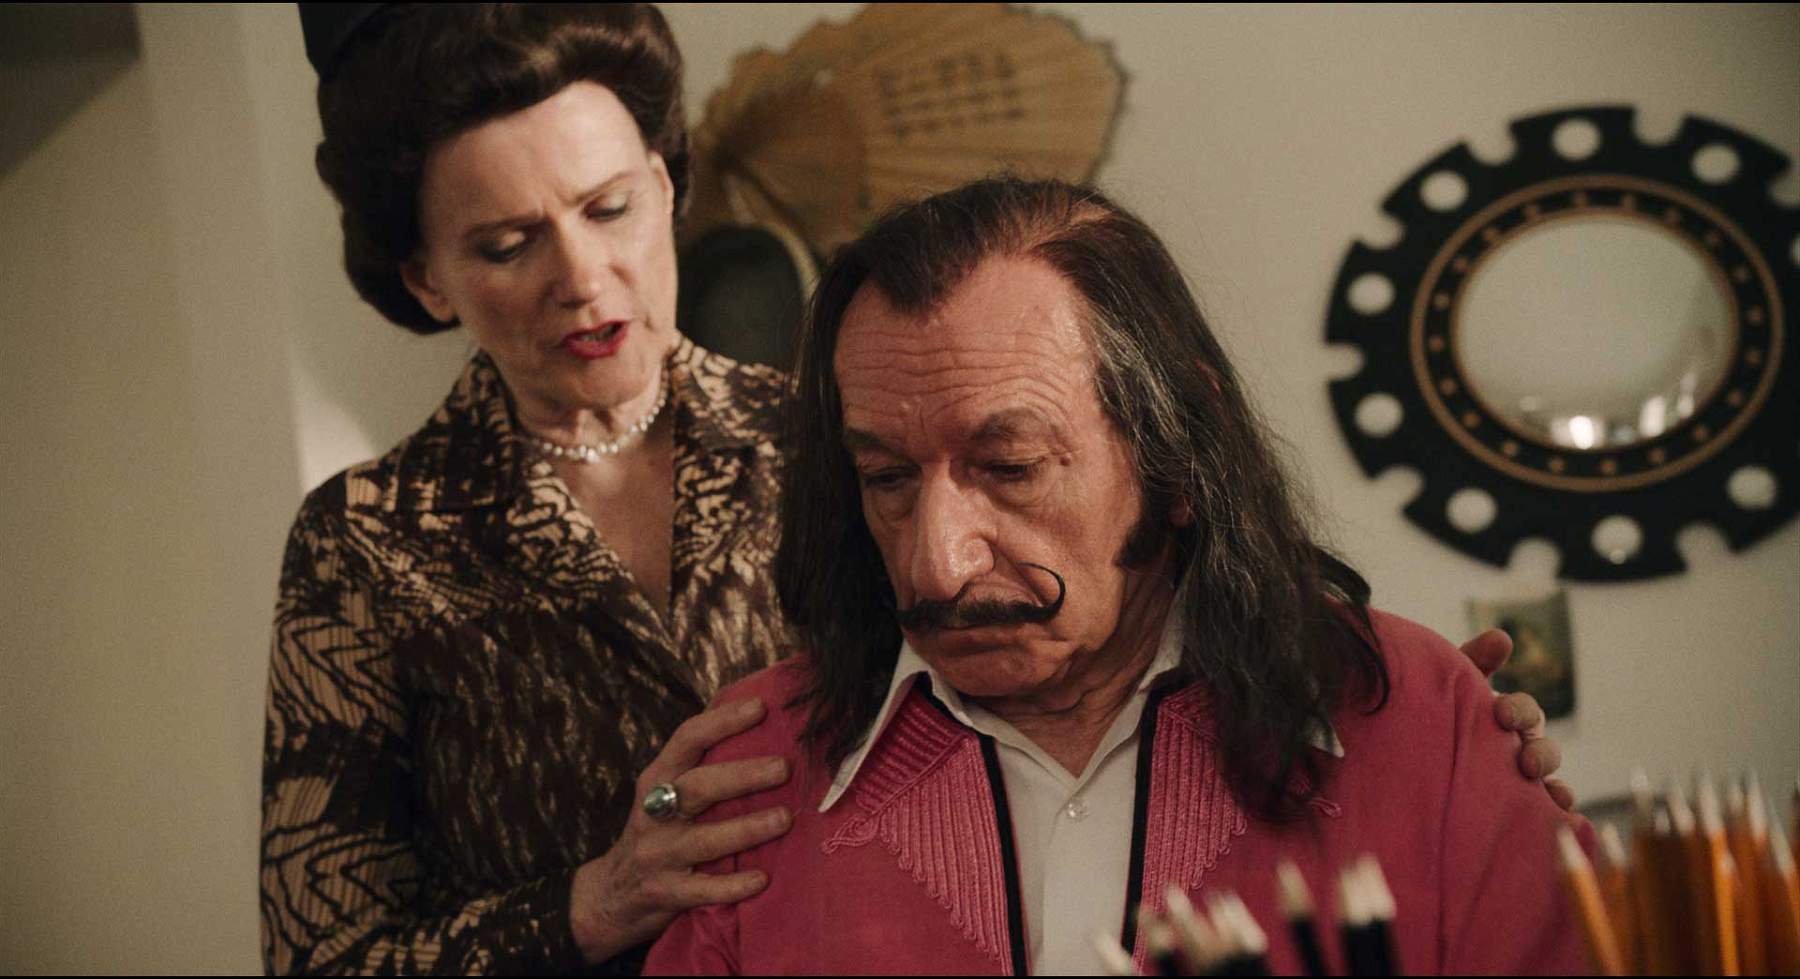 Arriva al cinema “Dalíland”, il biopic su Salvador Dalí